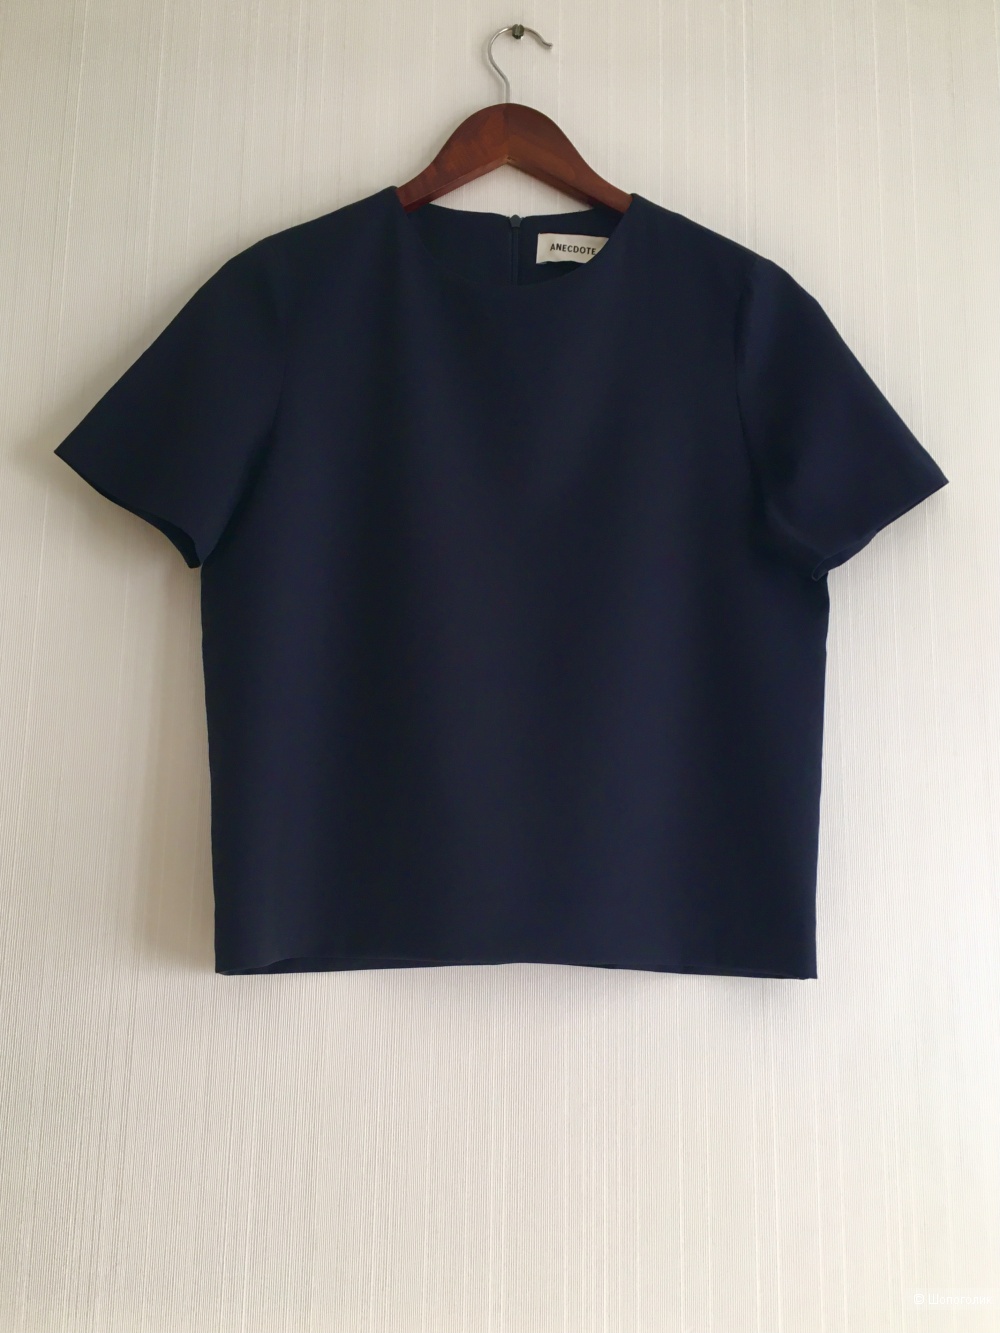 Блузка (топ / футболка) бренда Anecdote, размер S (42-44)